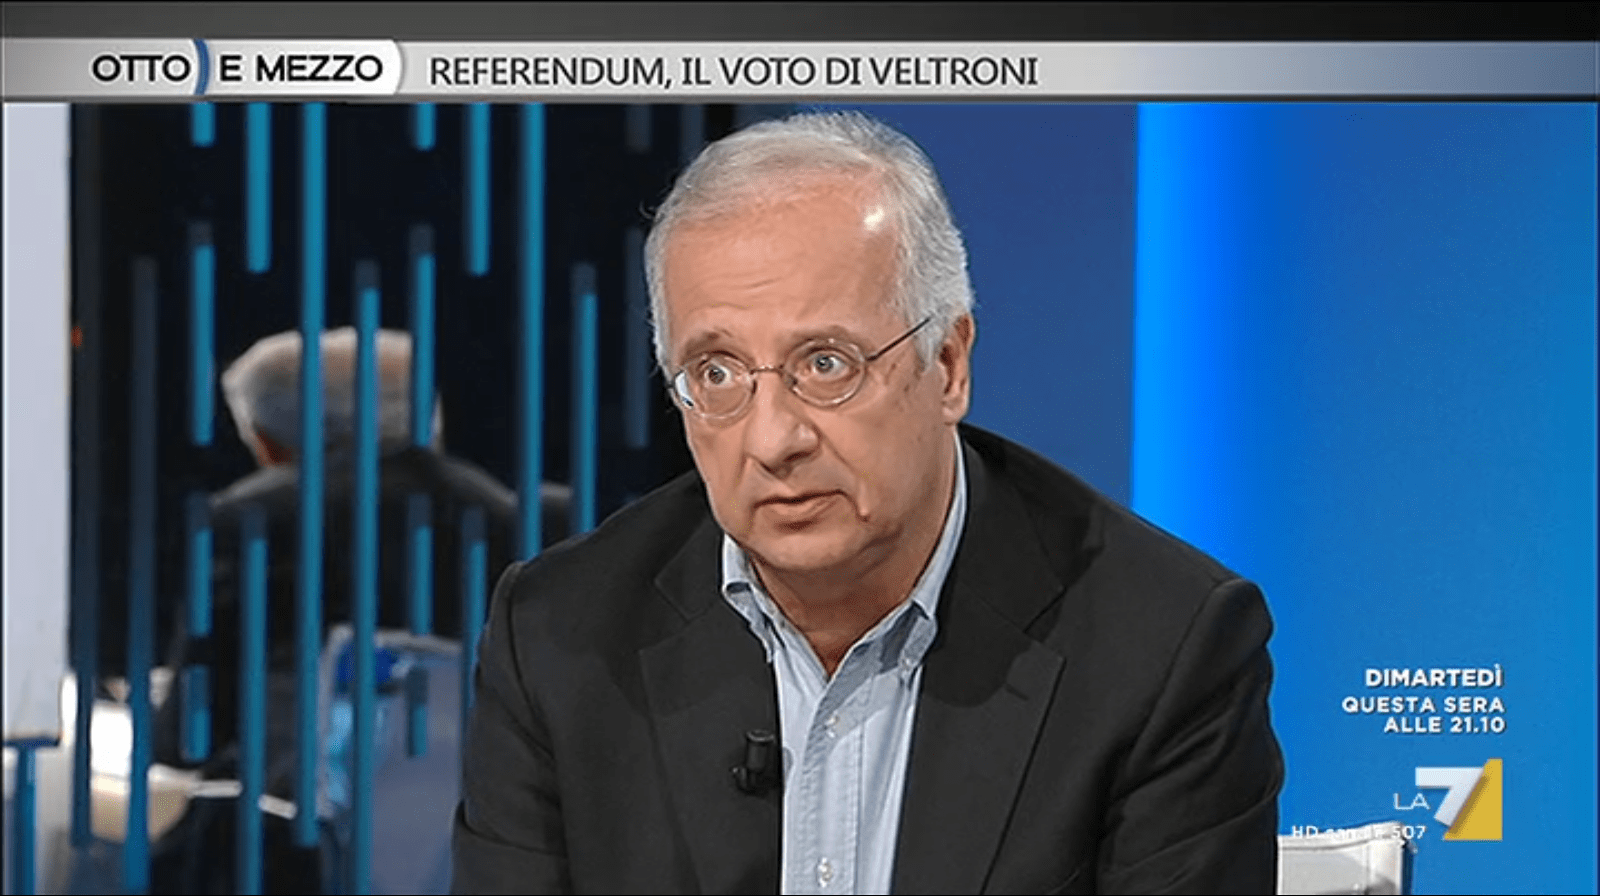 Referendum costituzionale, Veltroni: “Voto Sì al referendum per evitare l’instabilità politica”